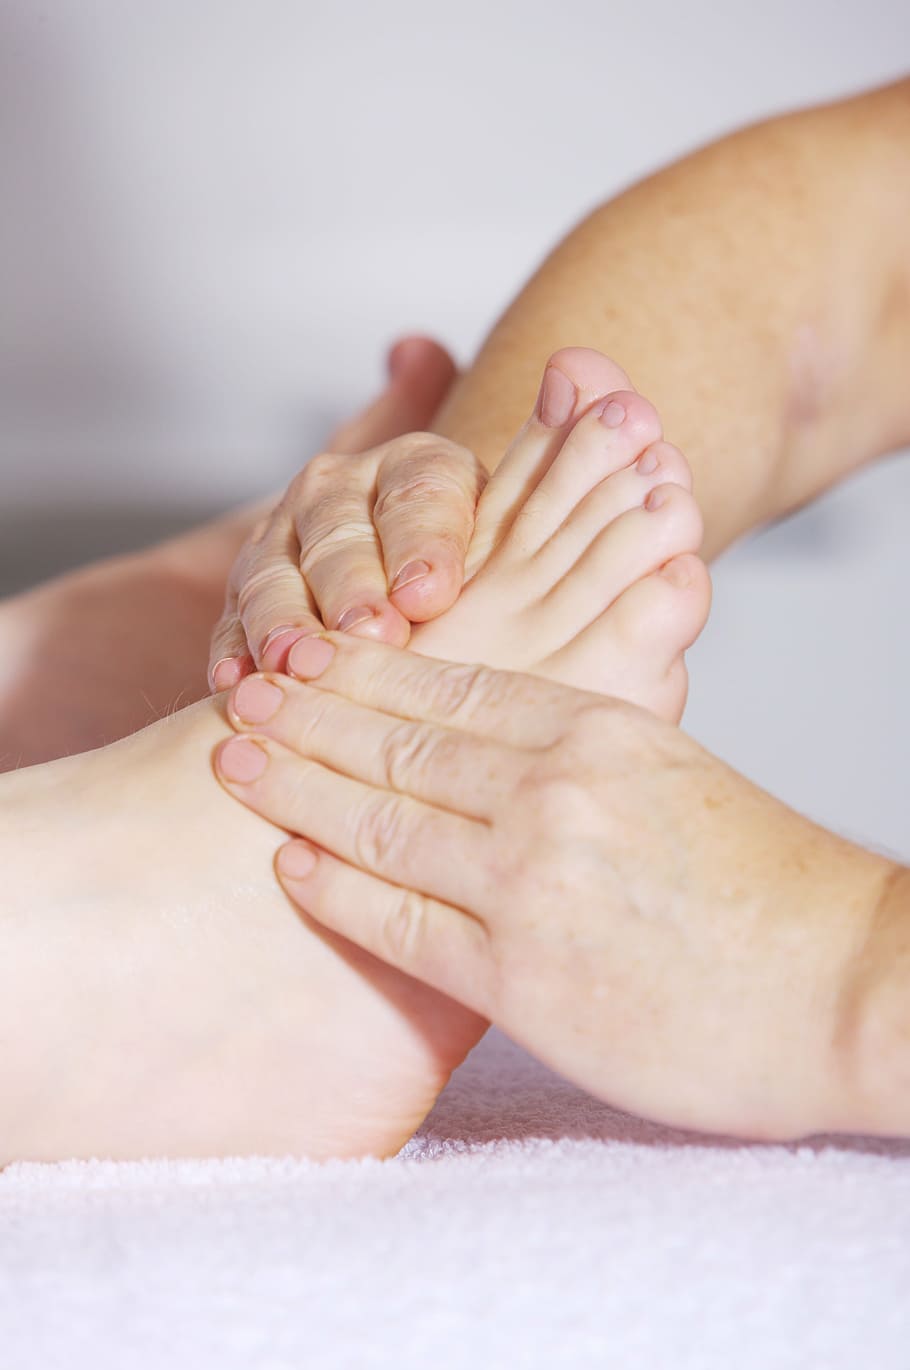 foot massaging, foot massage, foot reflexology, alternative medicine